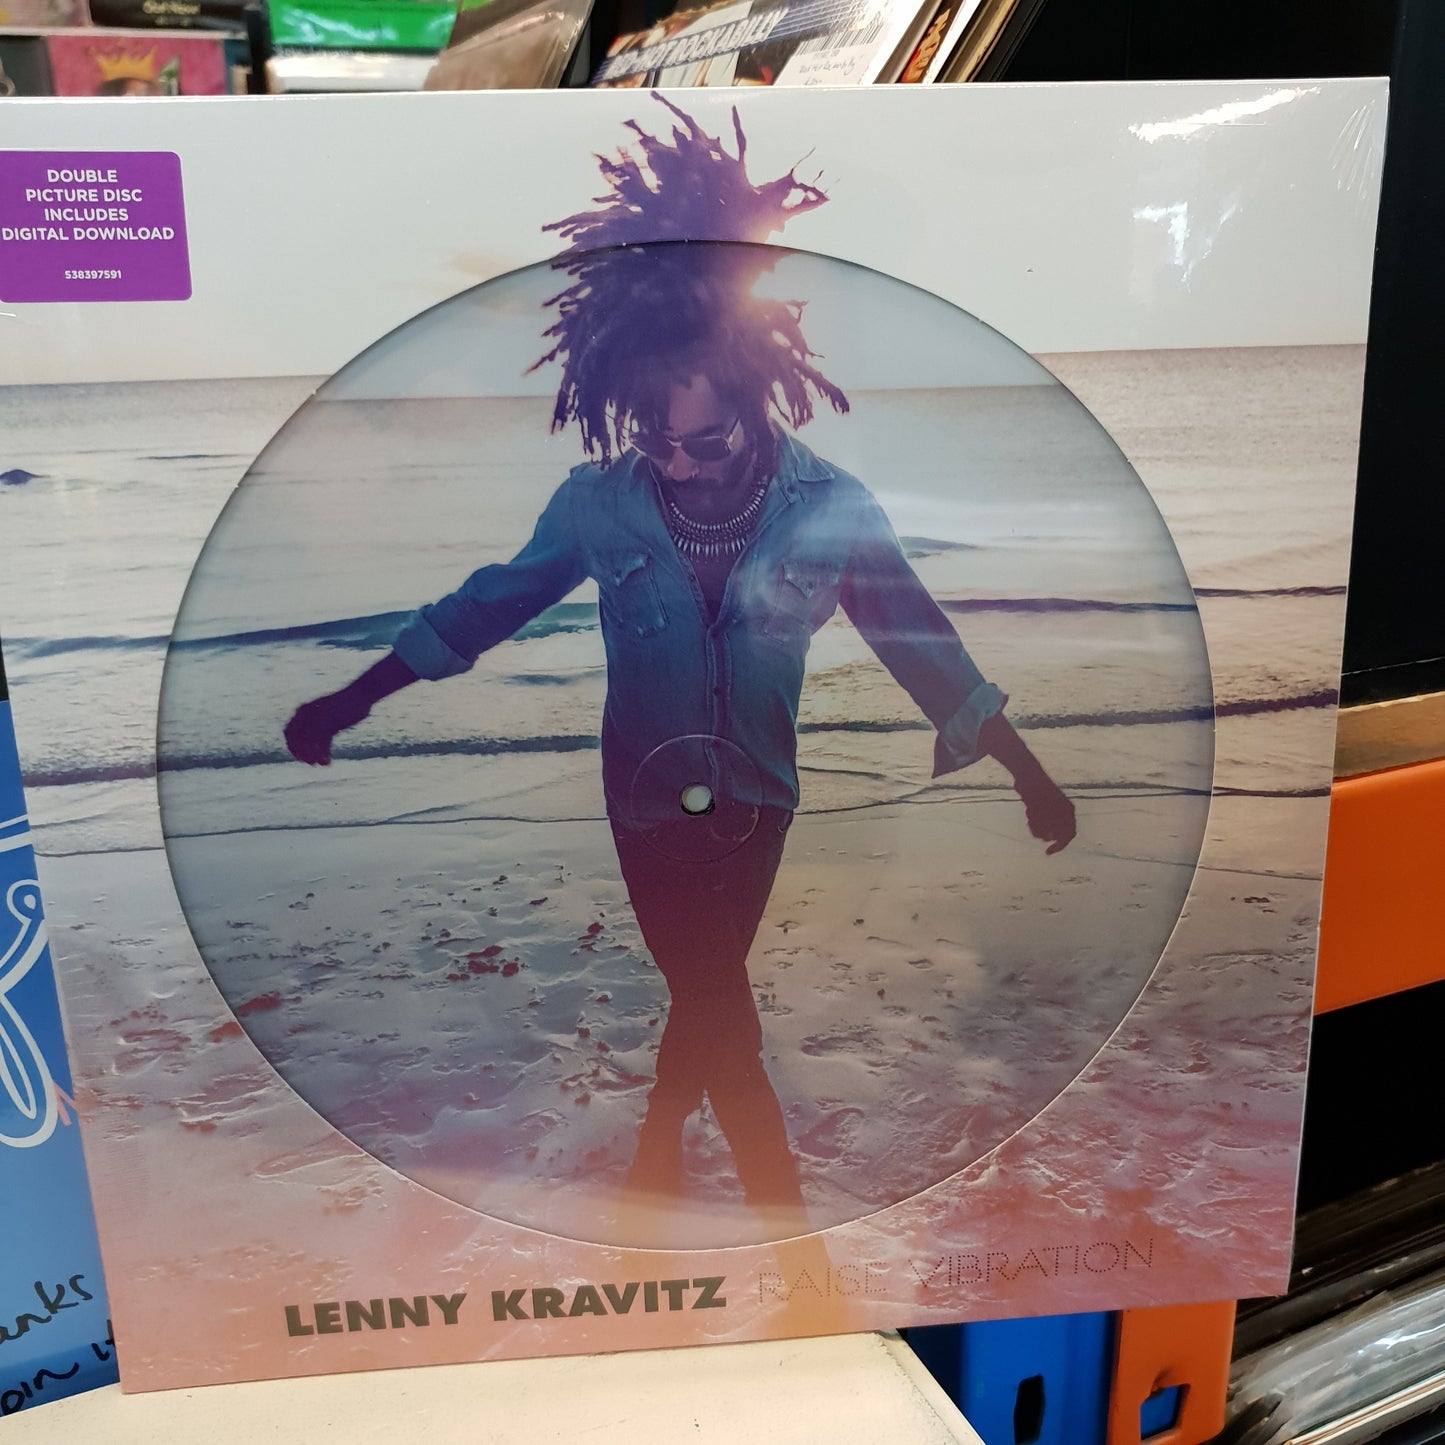 NEW - Lenny Kravitz, Raise Vibration Pic Disc 2LP